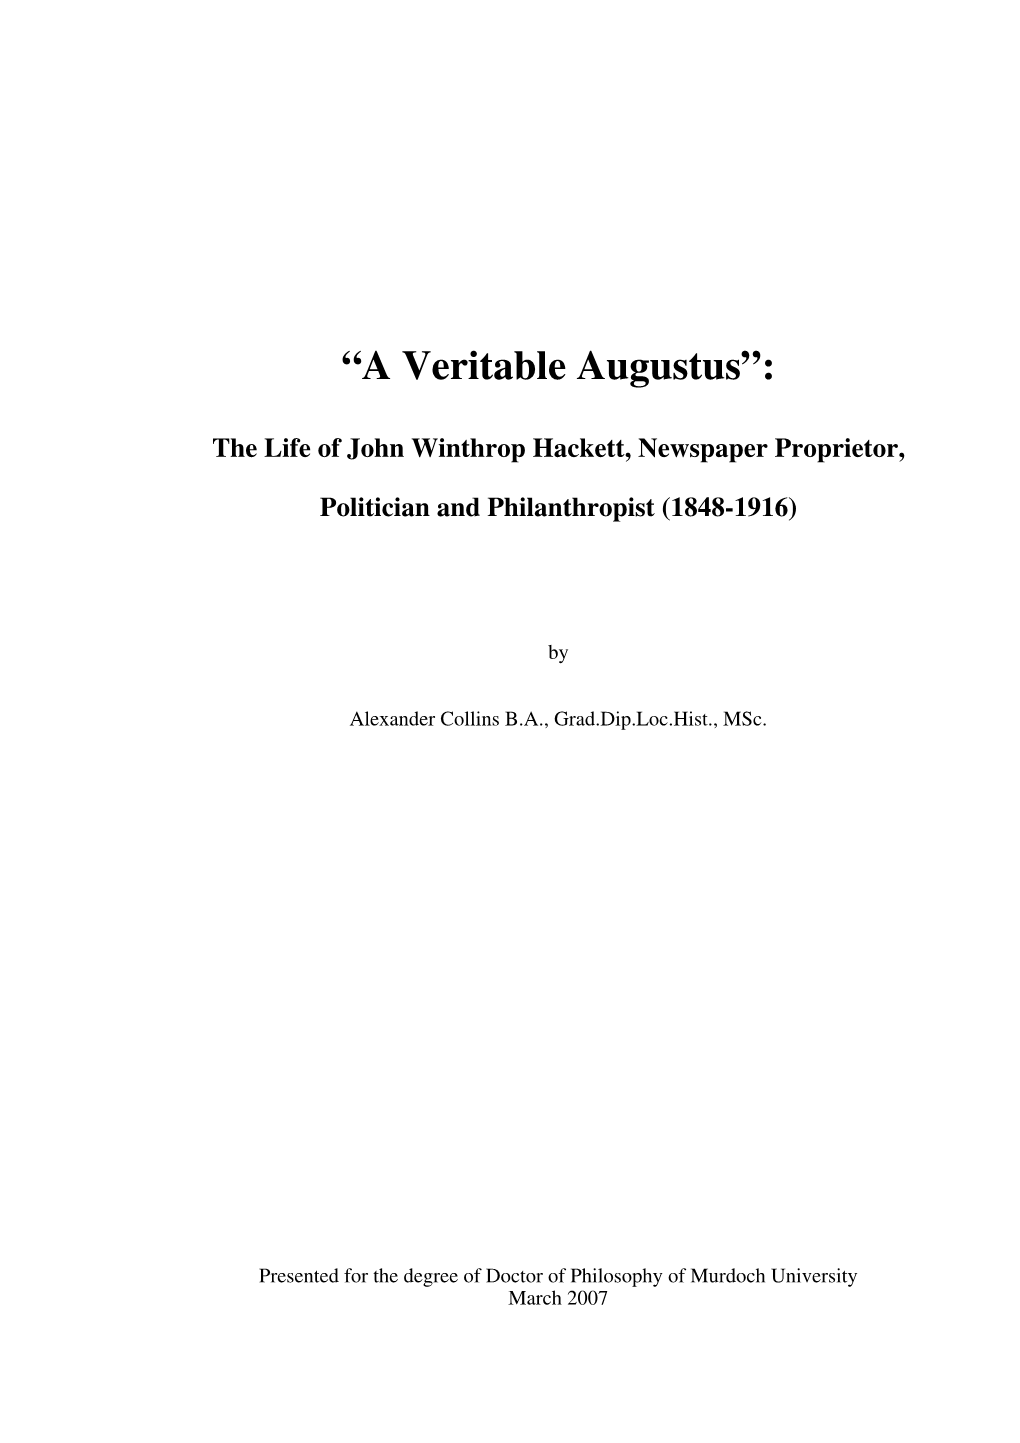 “A Veritable Augustus”: the Life of John Winthrop Hackett, Newspaper